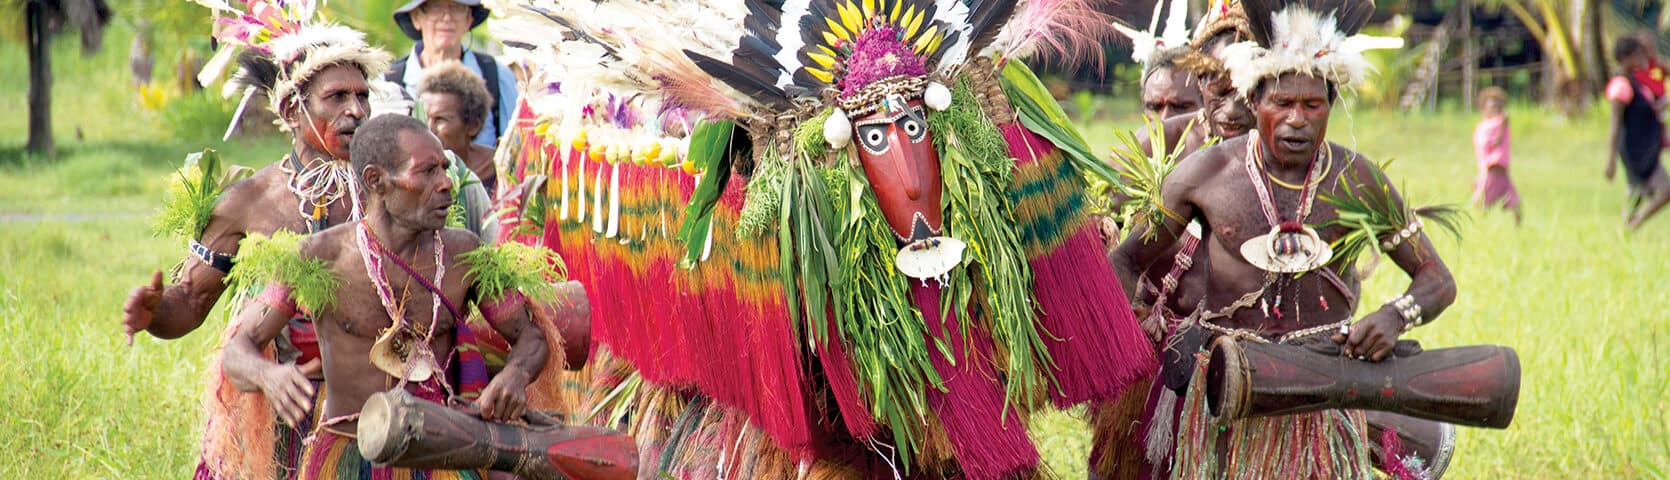 Papua New Guinea - Kopar